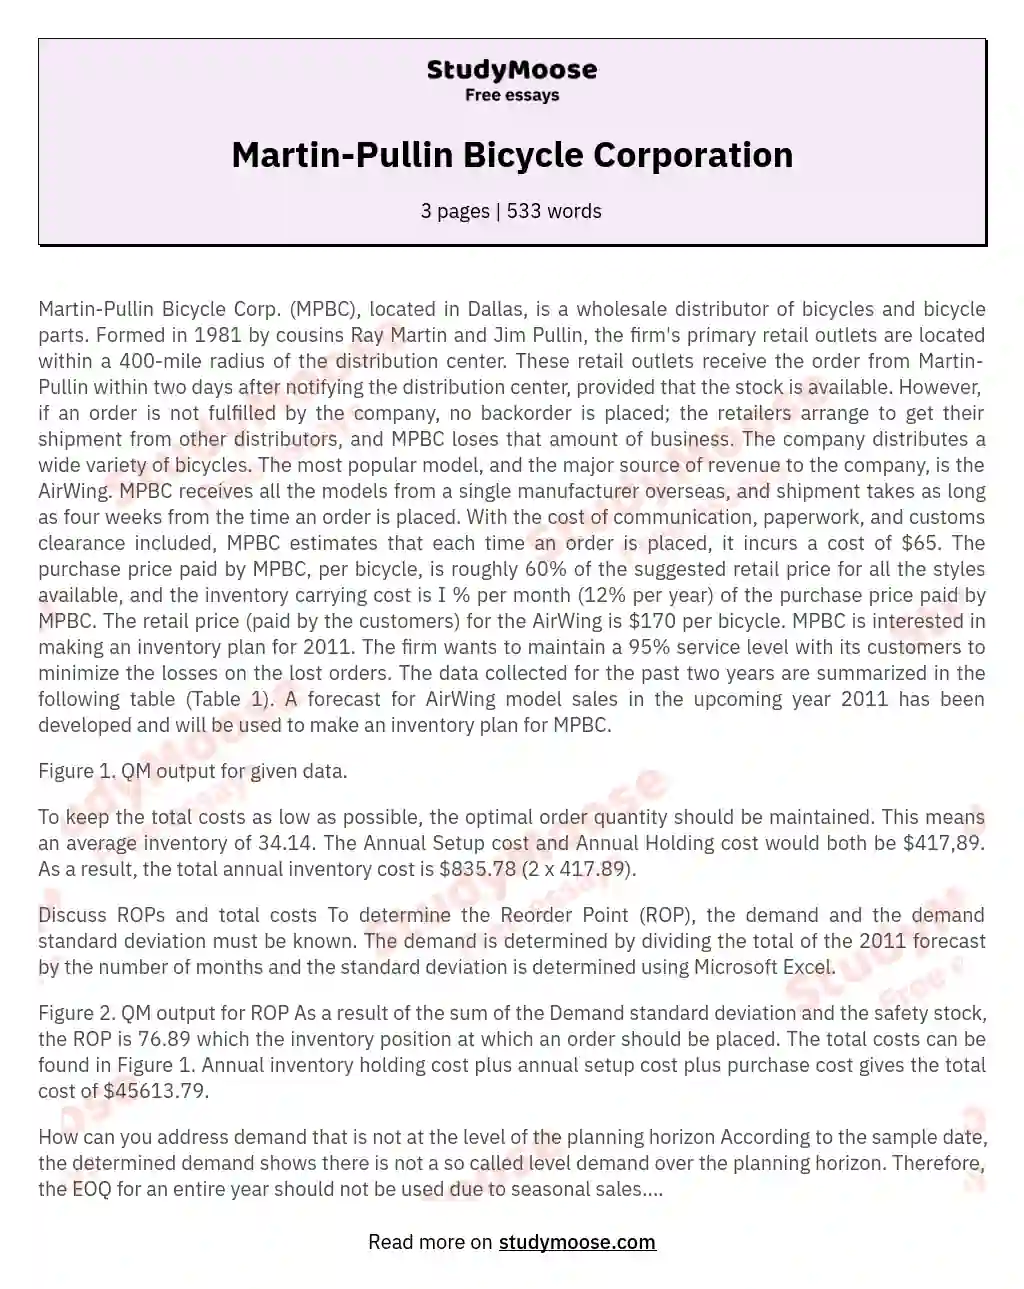 Martin-Pullin Bicycle Corporation essay